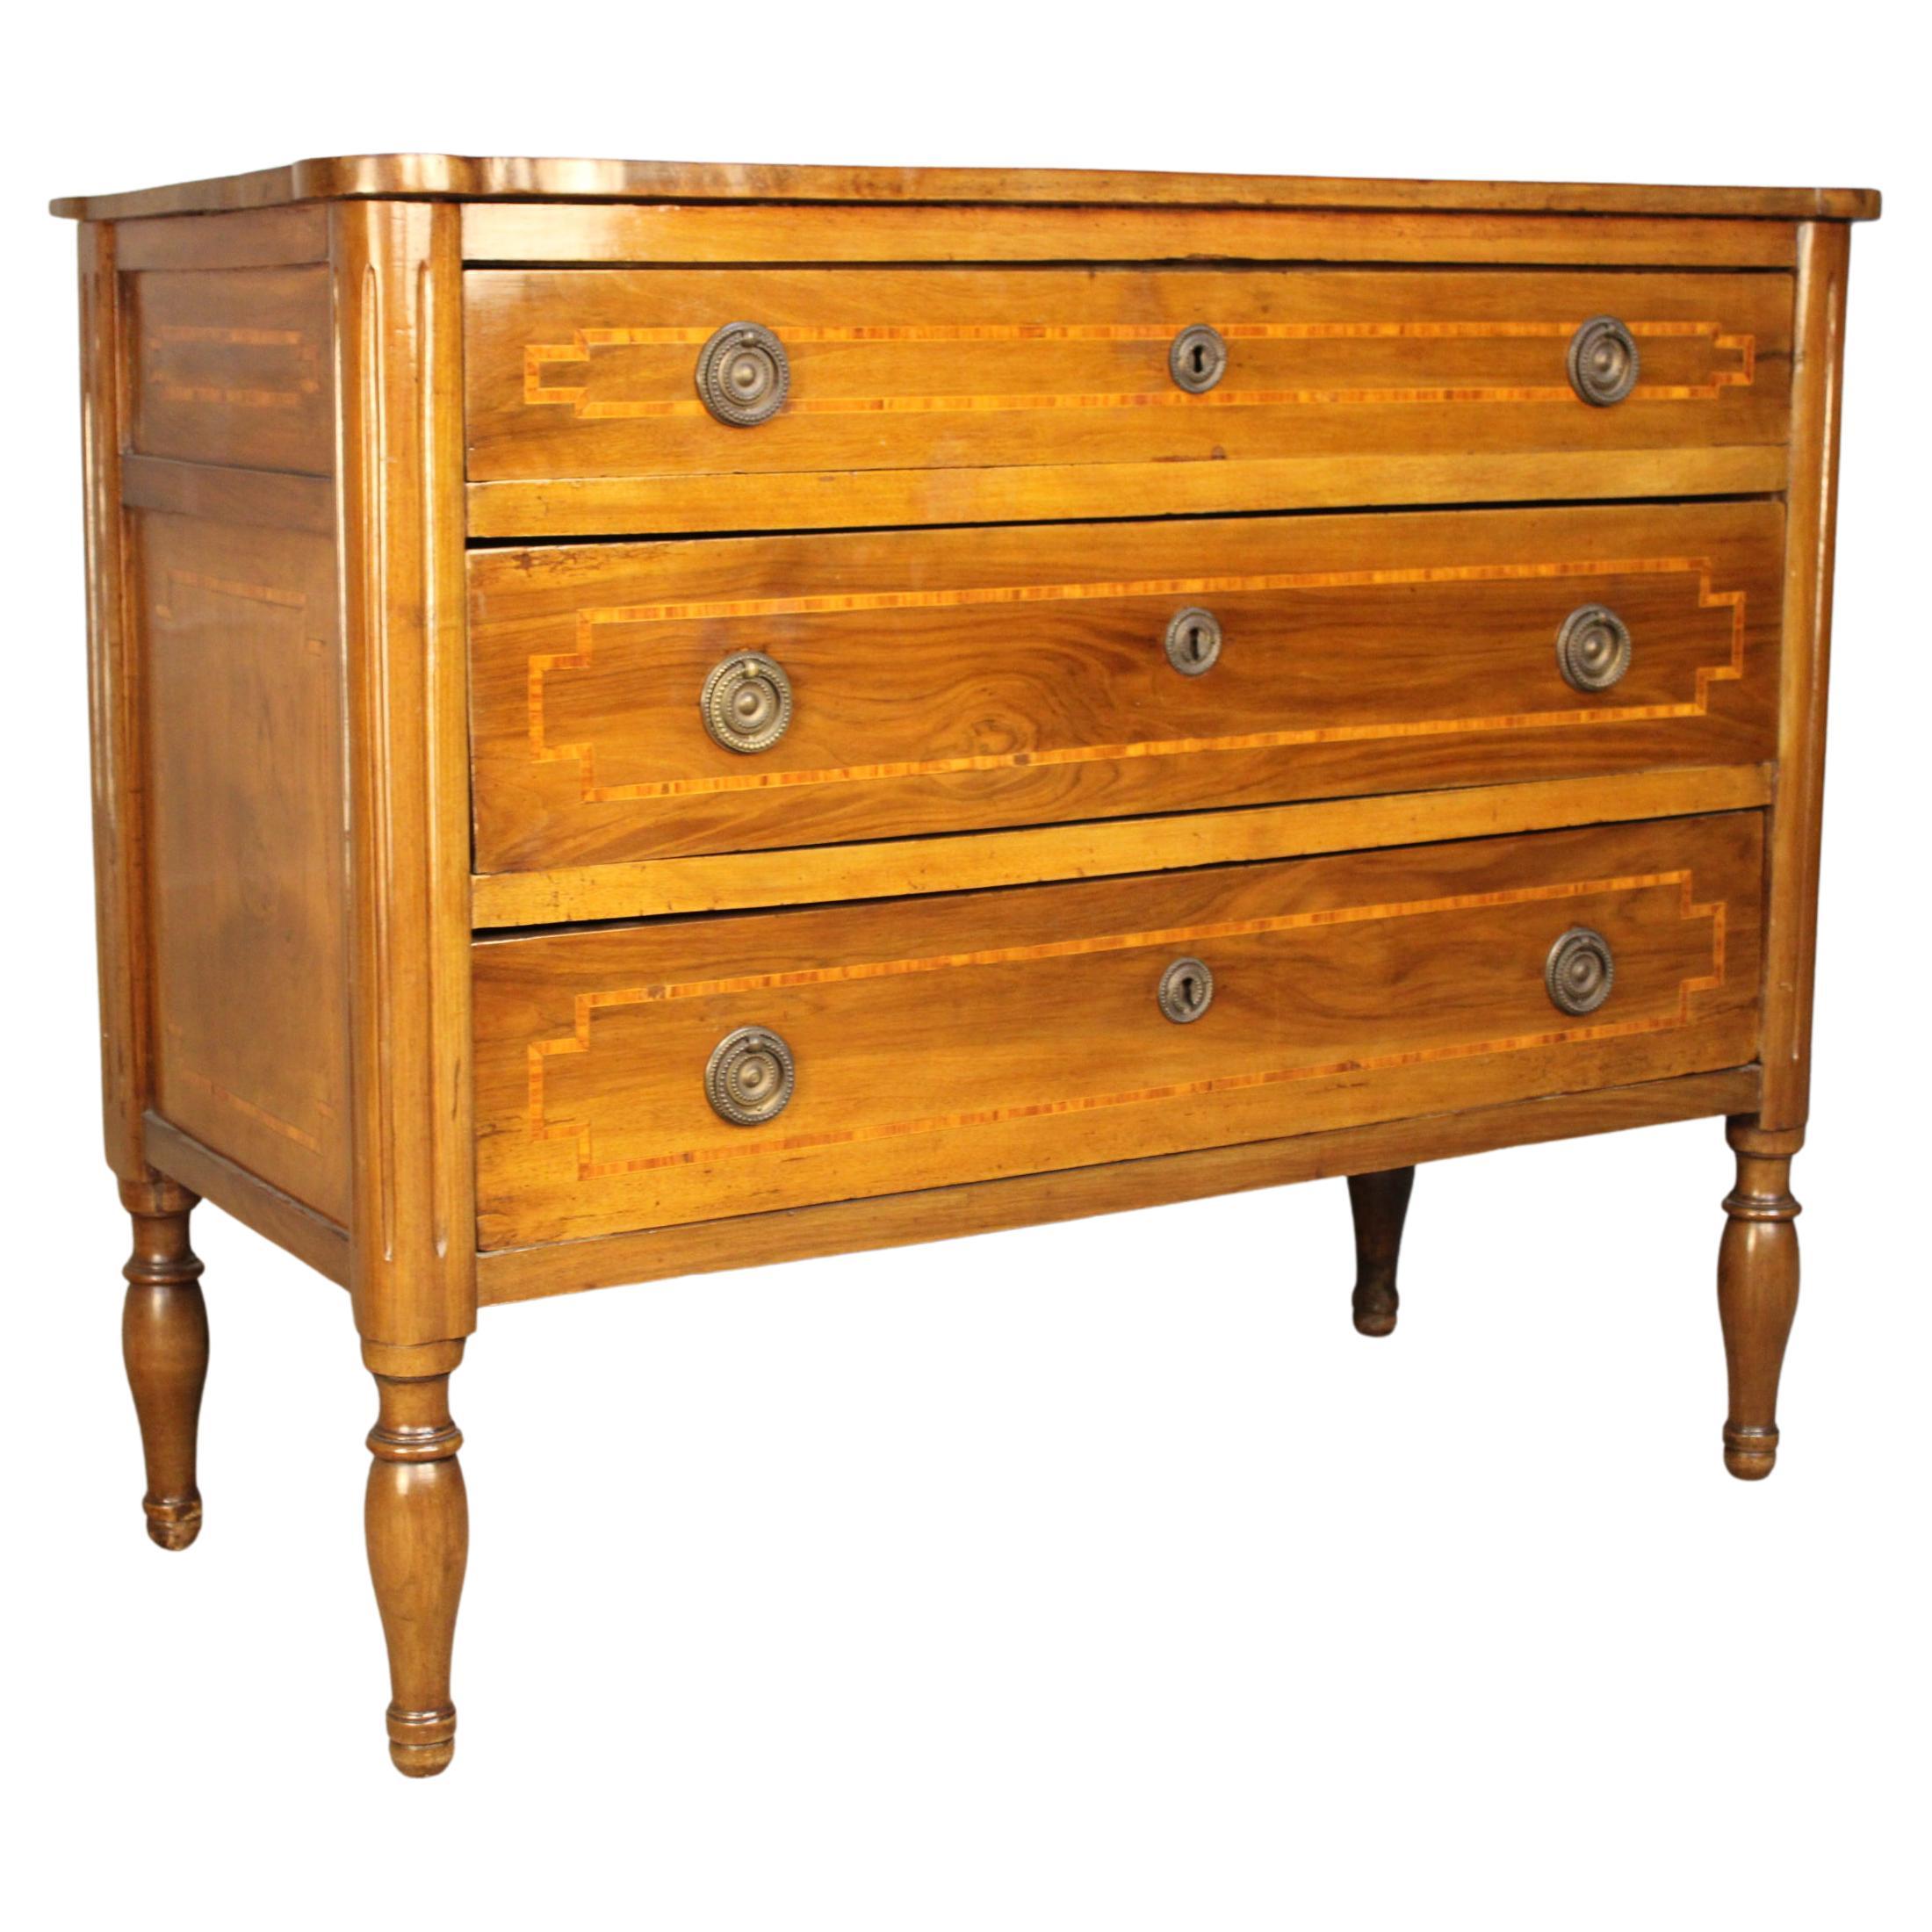 18th century Louis XVI Period inlaid Dresser circa 1780 France, antique commode For Sale